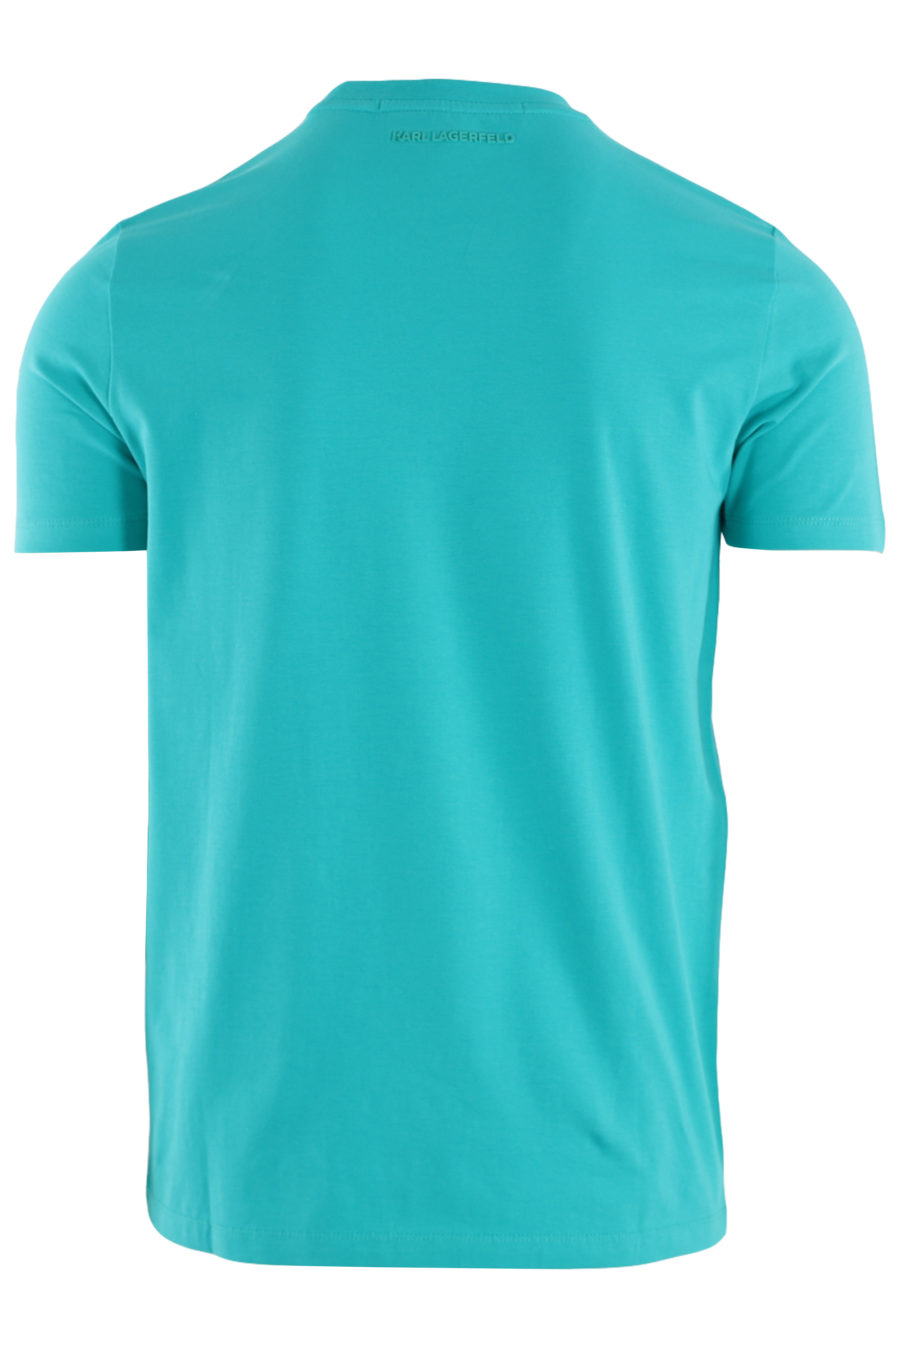 Camiseta color turquesa con logo de goma pequeño - IMG 8759